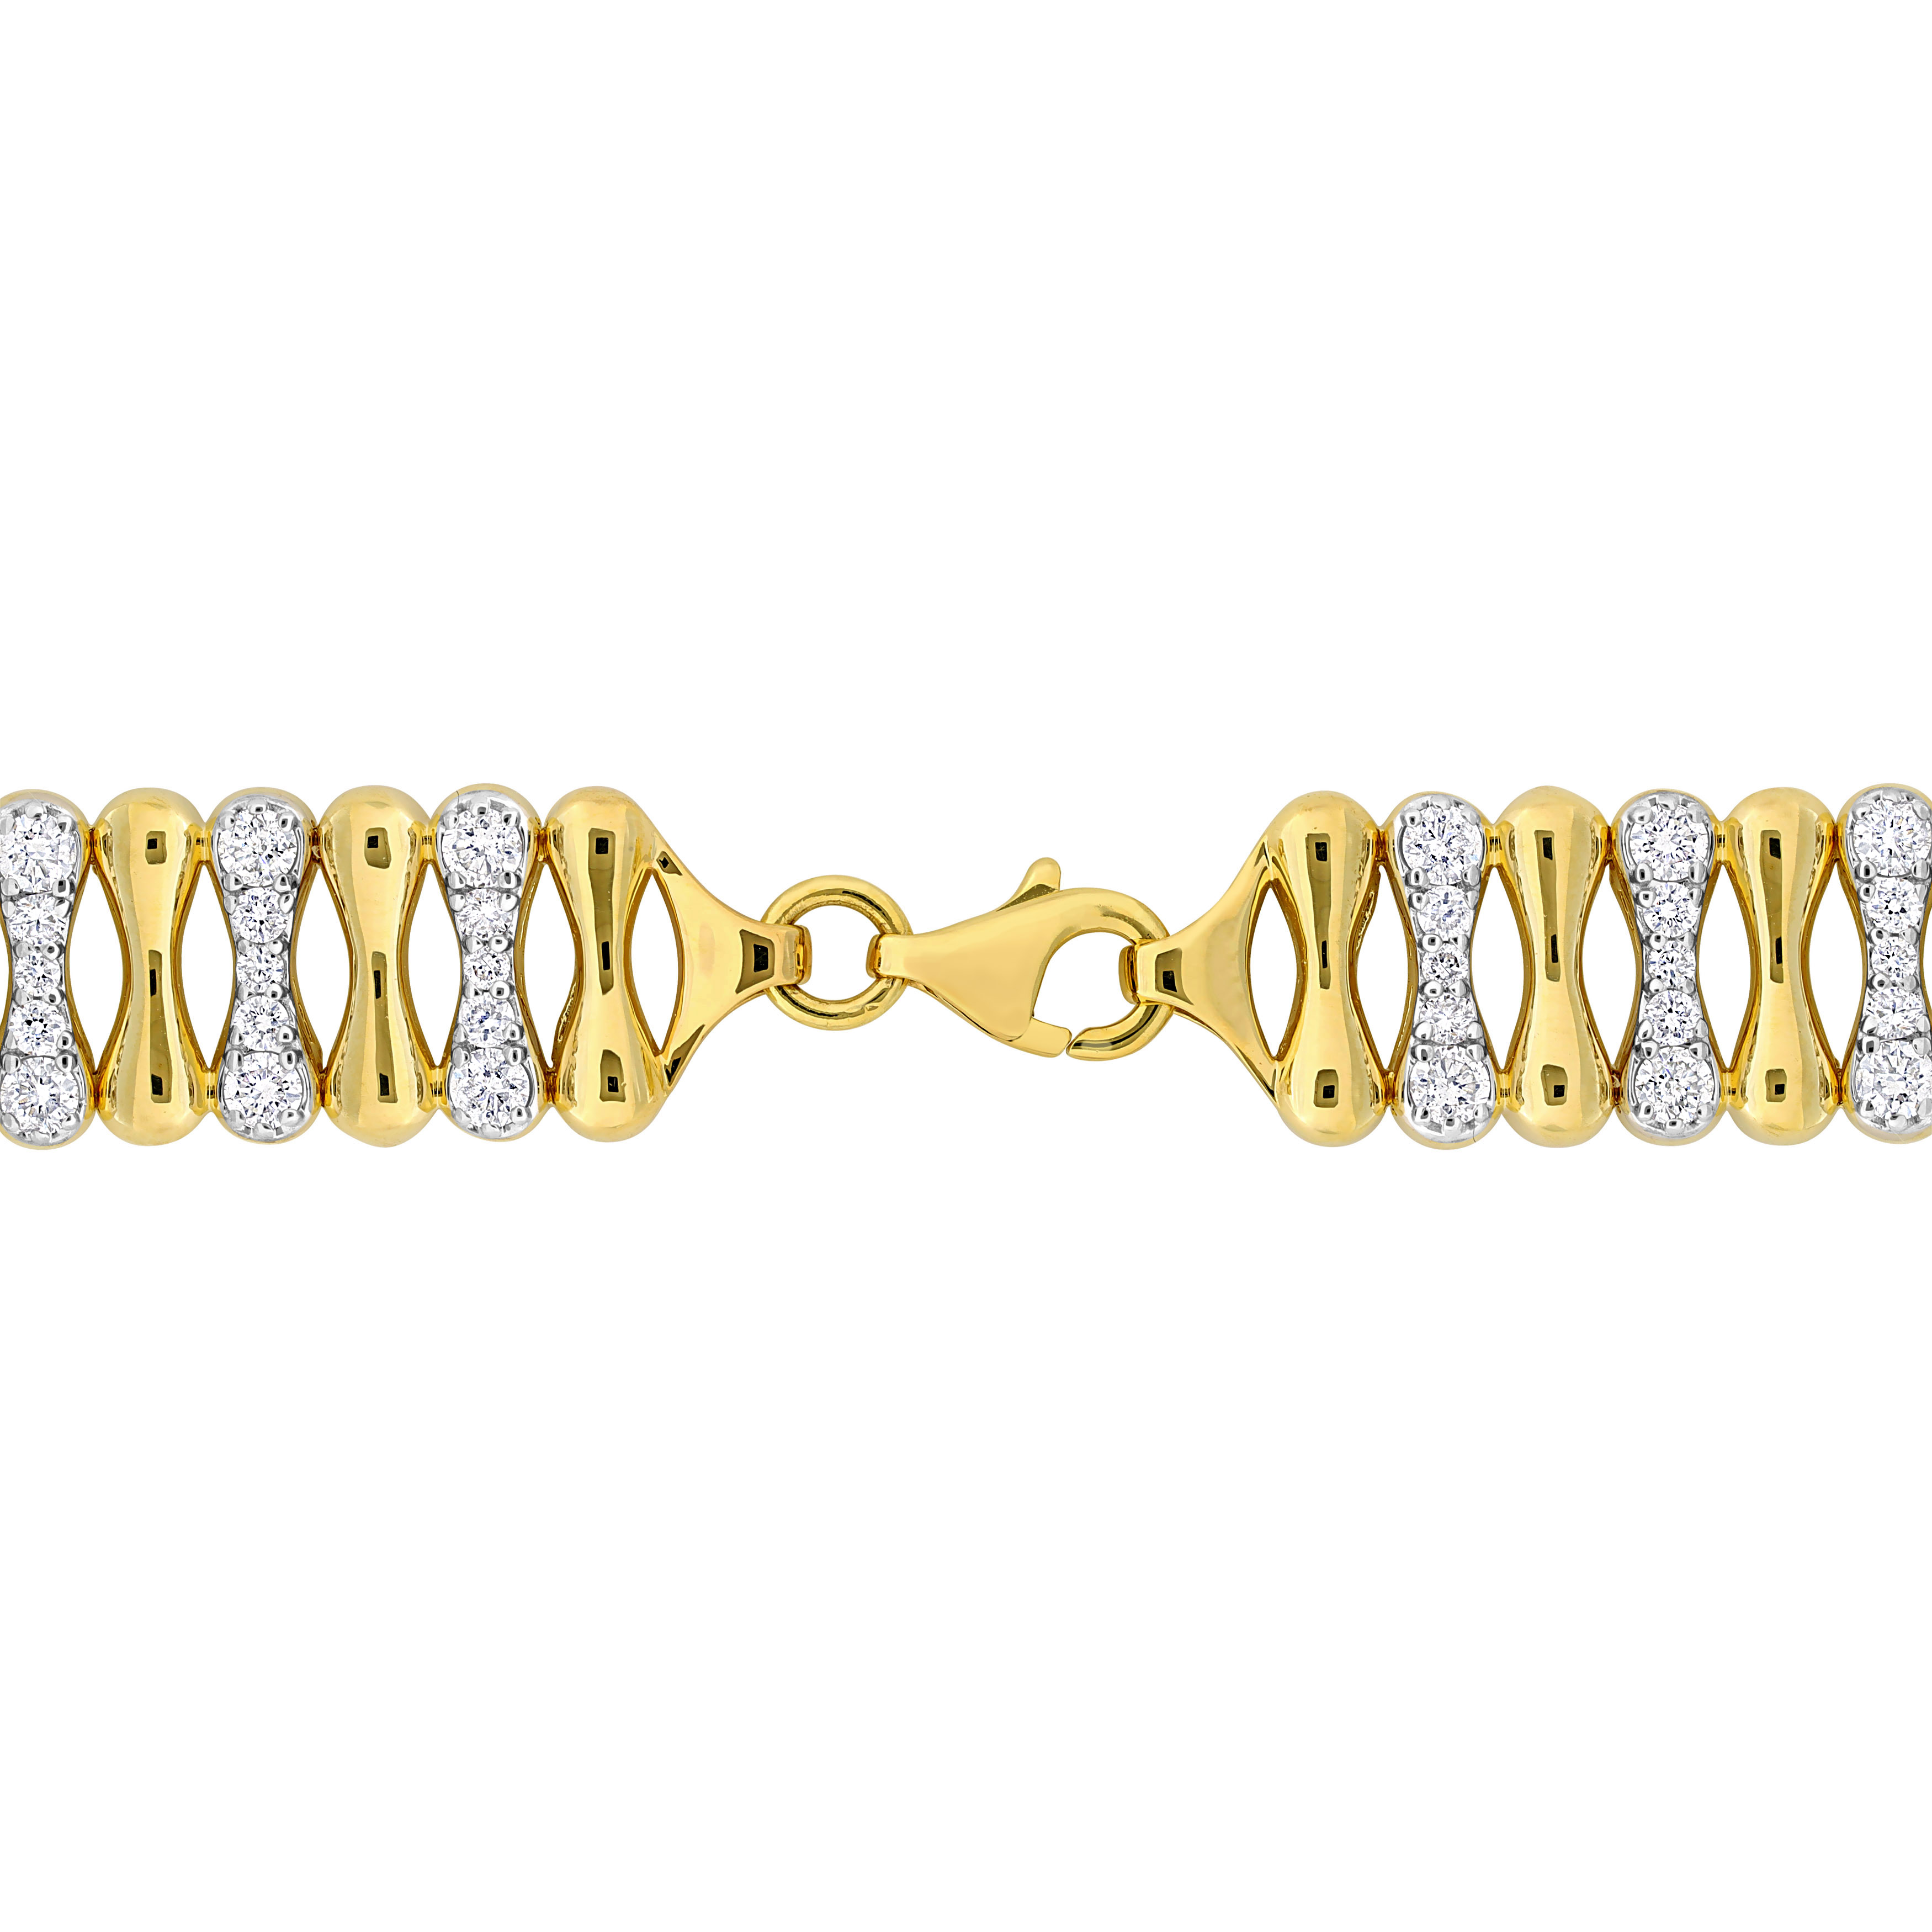 3 CT TDW Diamond Alternate Mounting Bracelet in 10k Yellow Gold - 7.5 in.